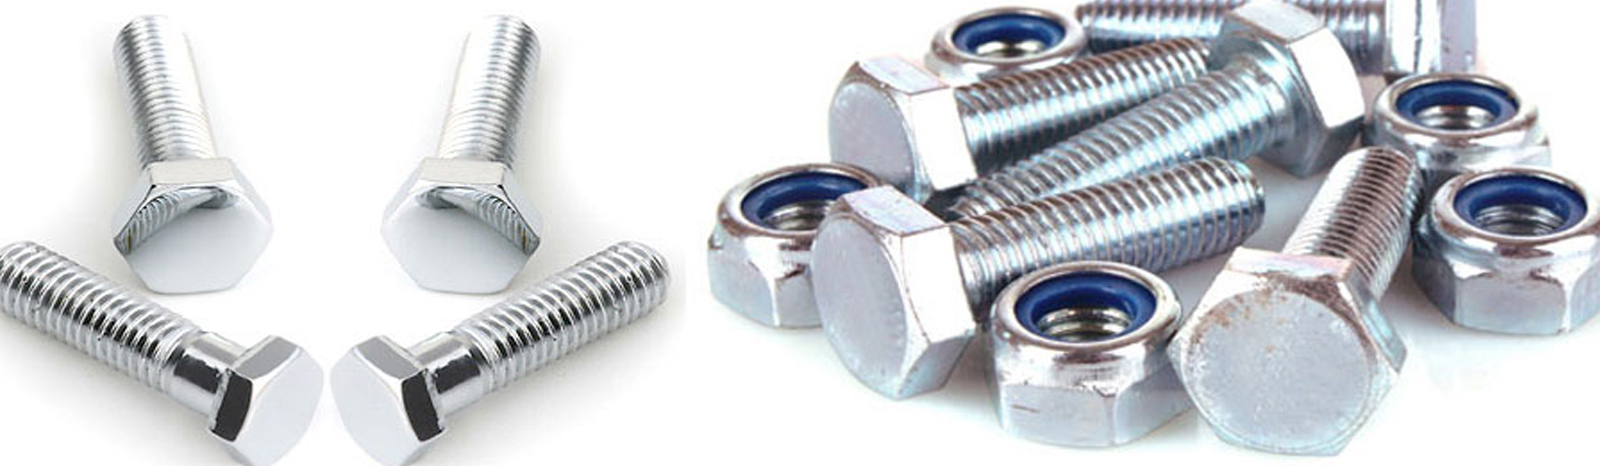 Inconel fasteners manufacturer exporter supplier